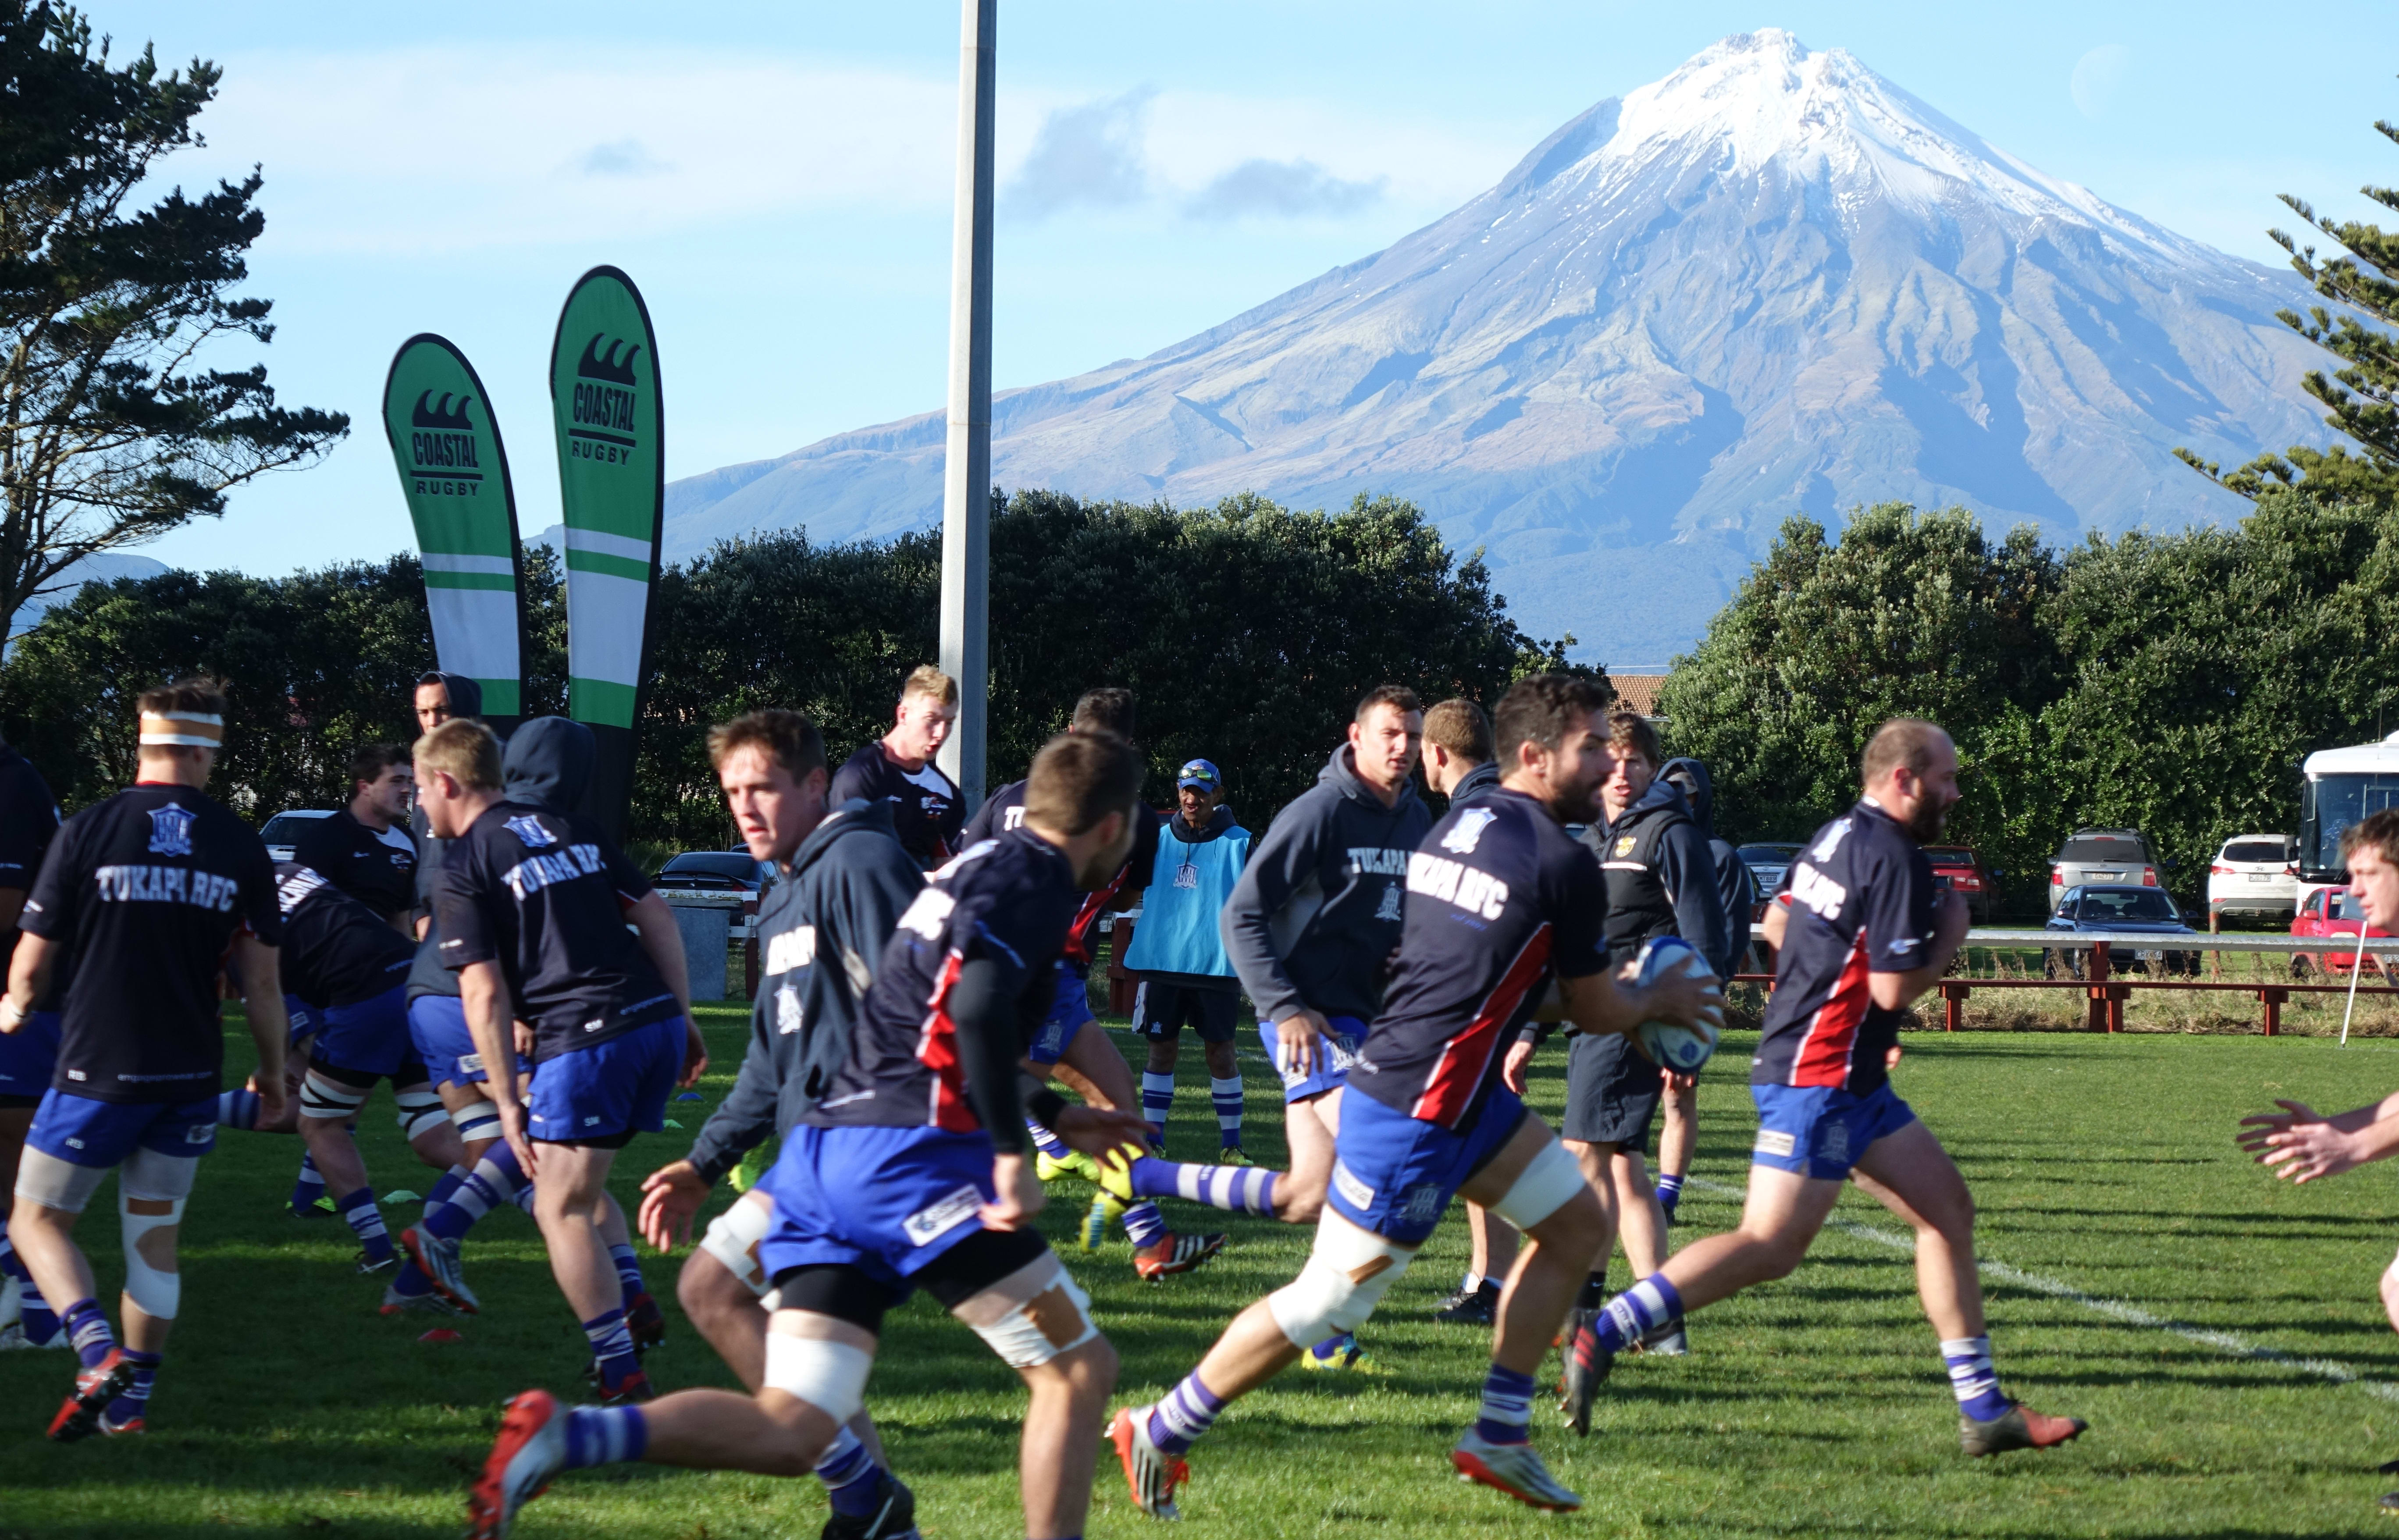 Tukapu Rugby Football Club colts players go through their drills ahead of a game against Coastal Rugby Football Union